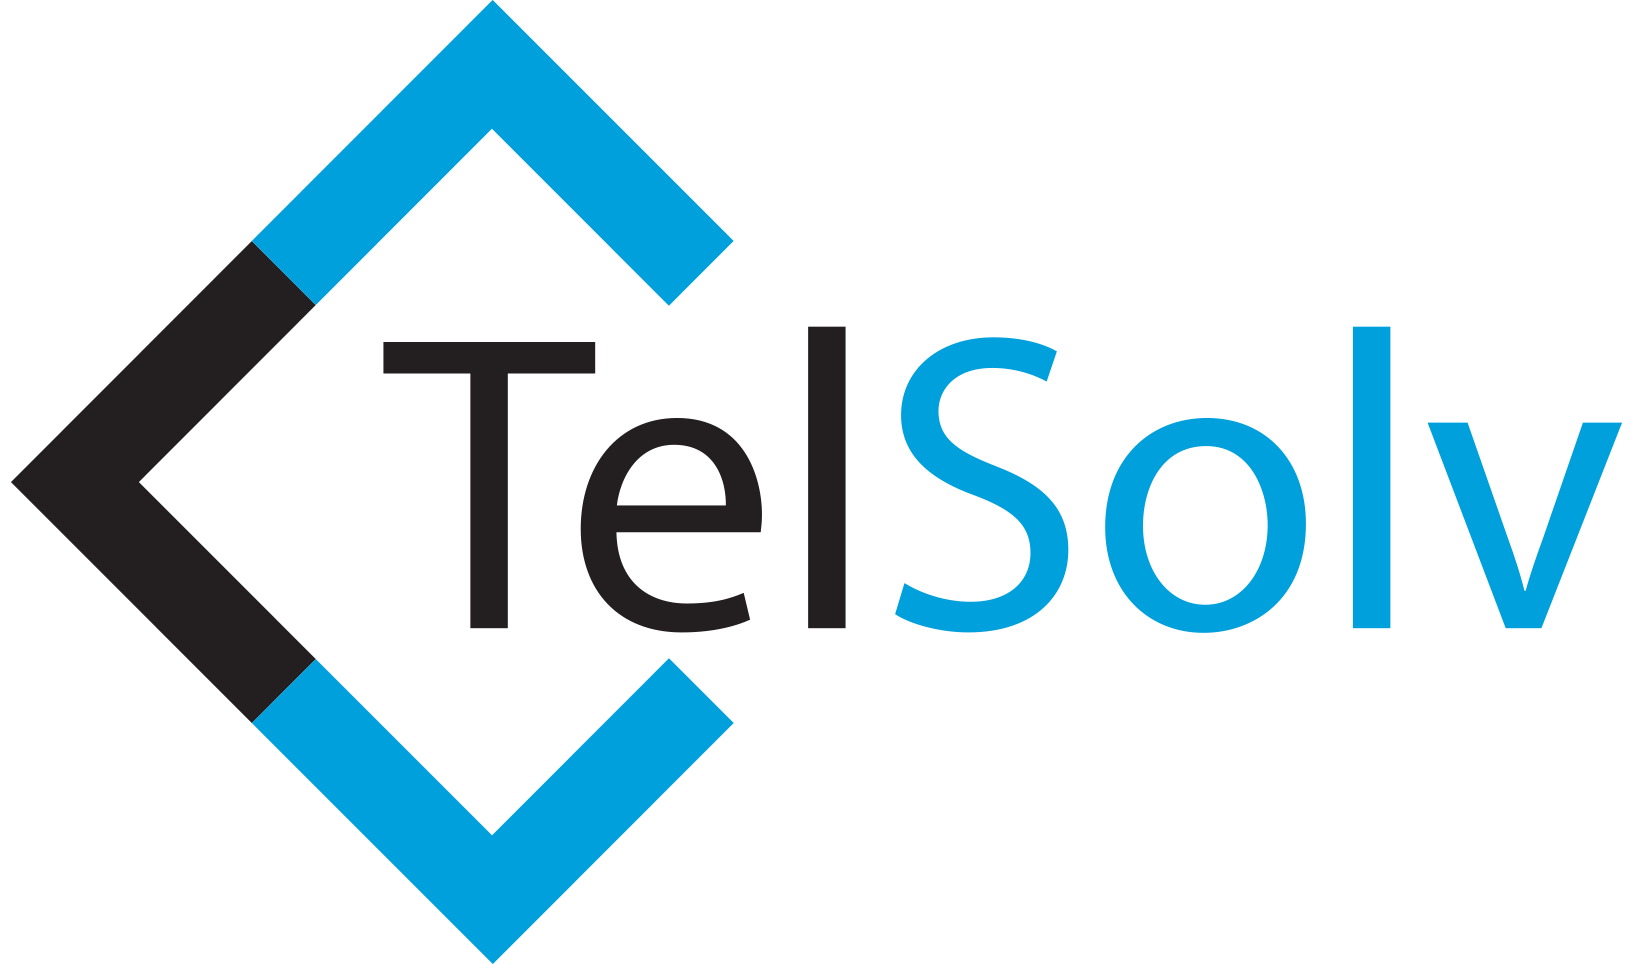 TelSolv_LogoFinal.png